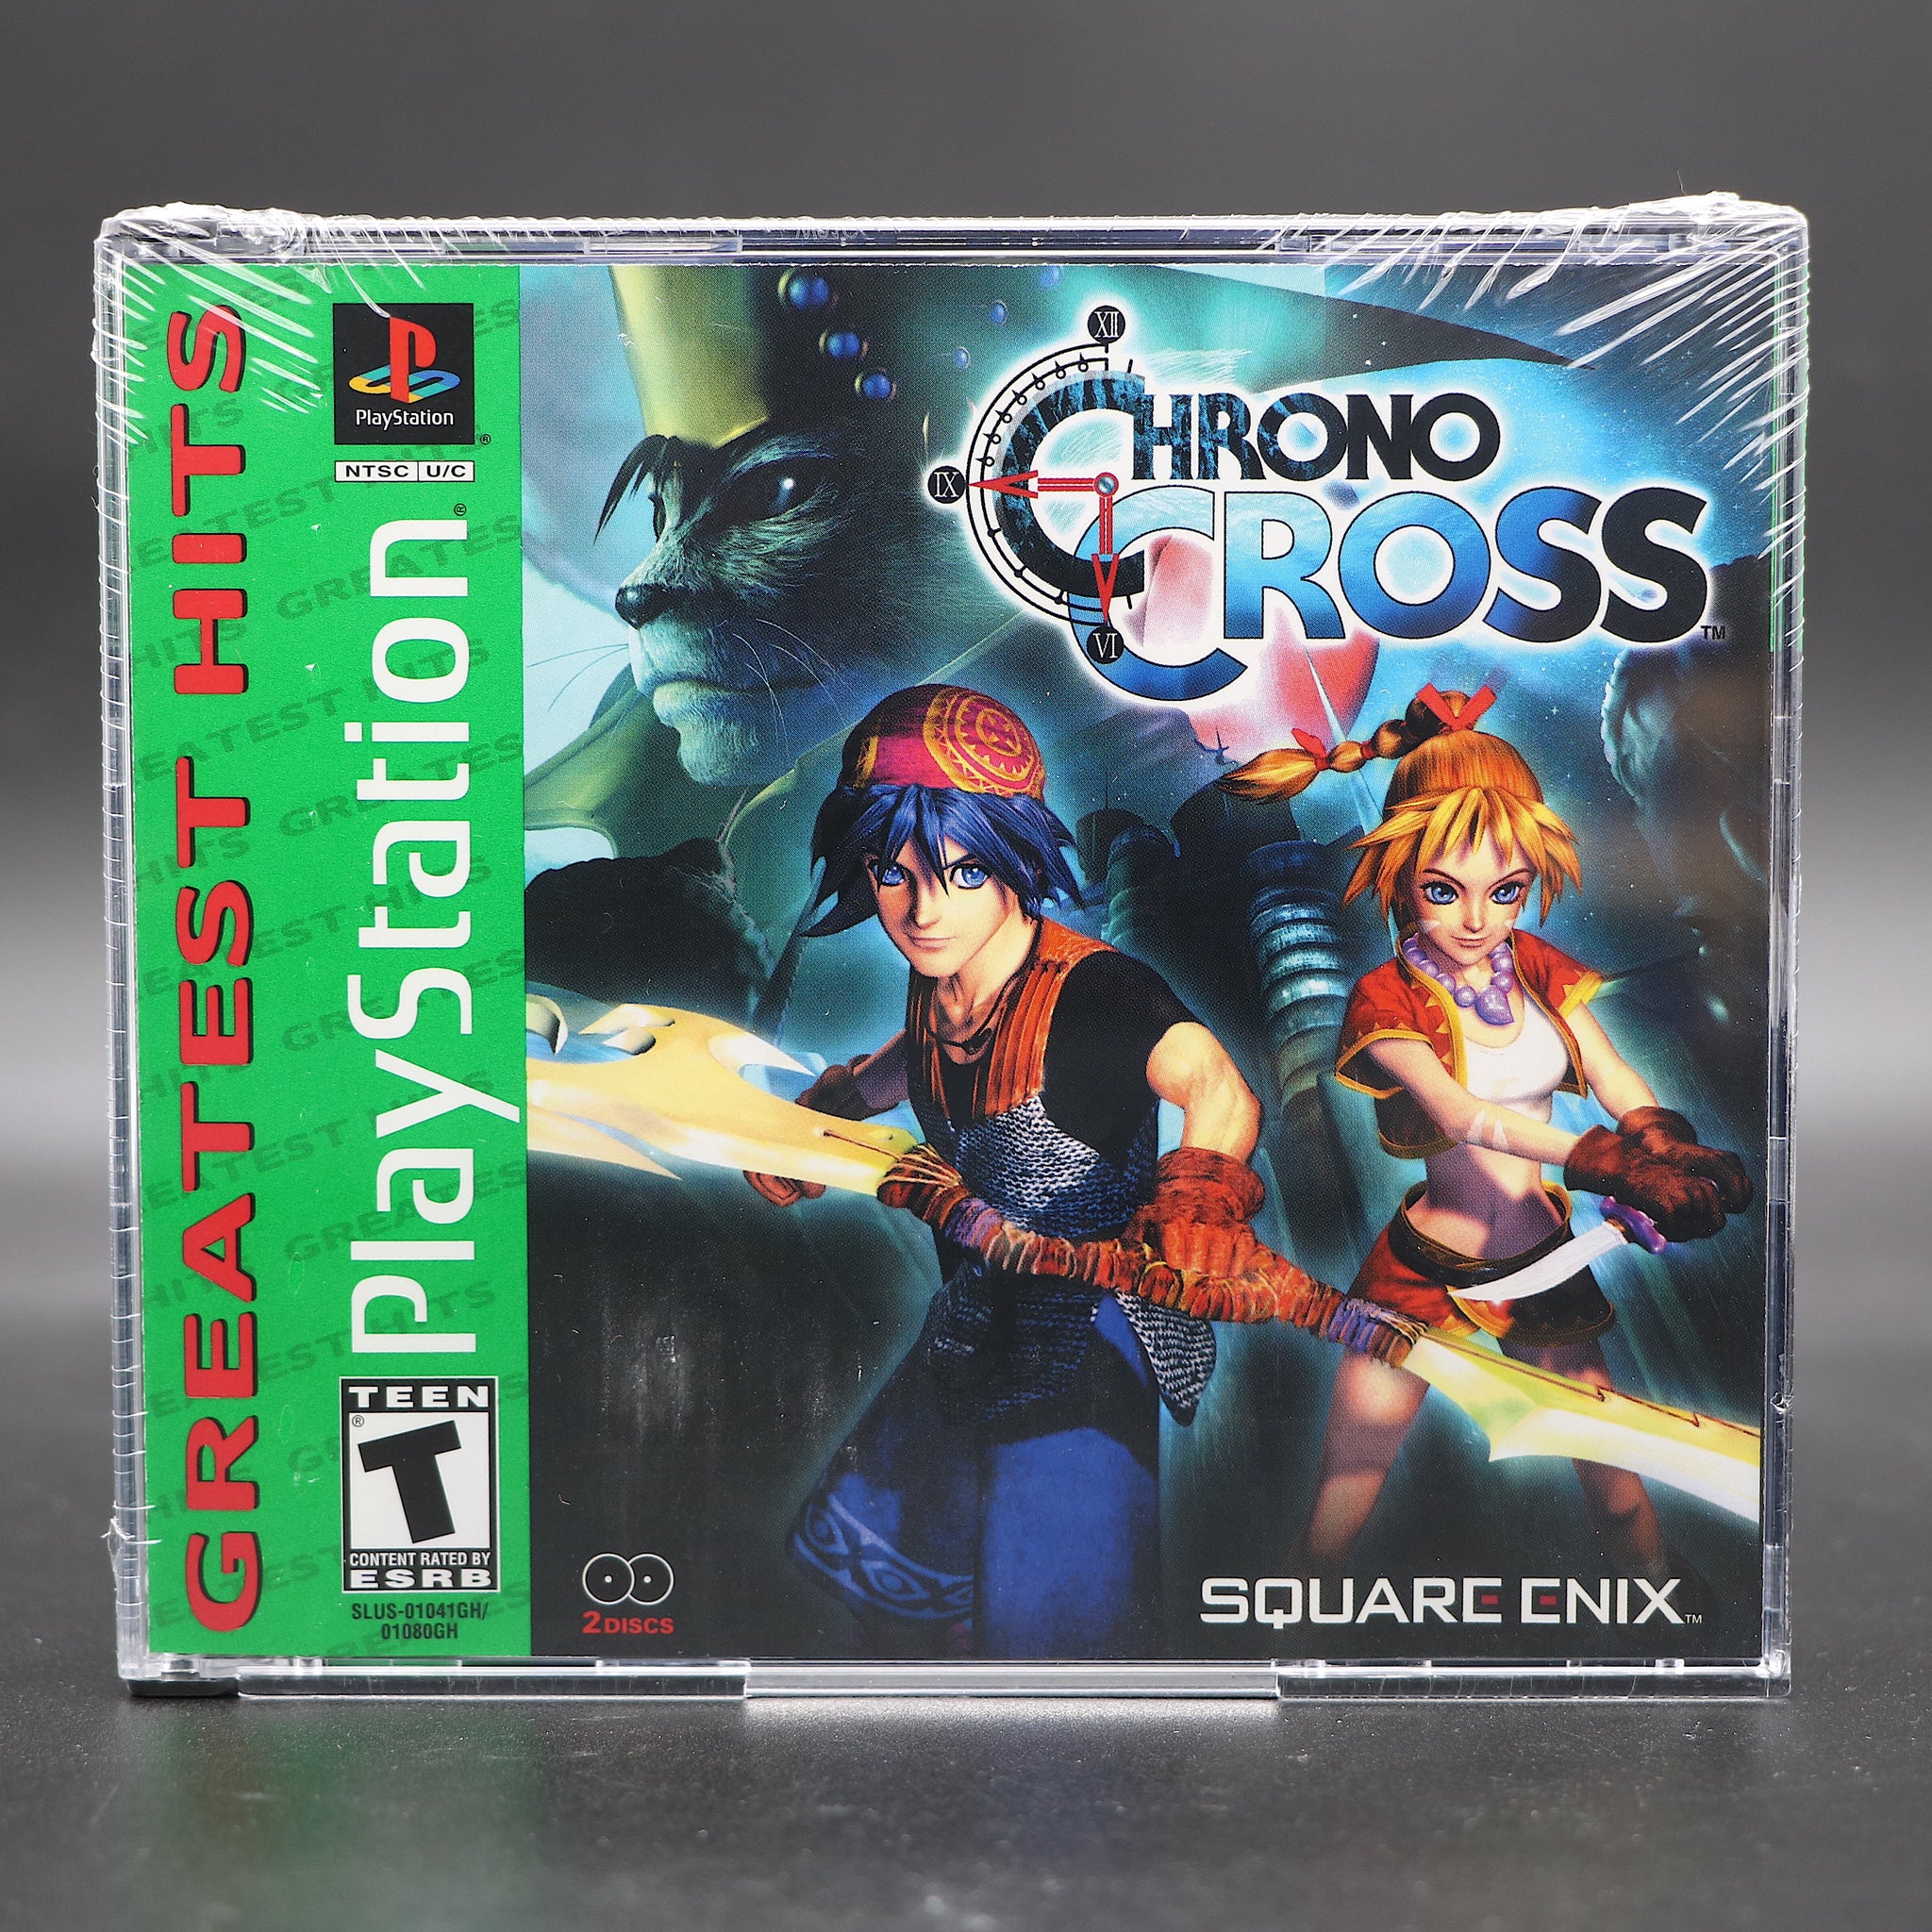 Chrono Cross - PlayStation, PlayStation